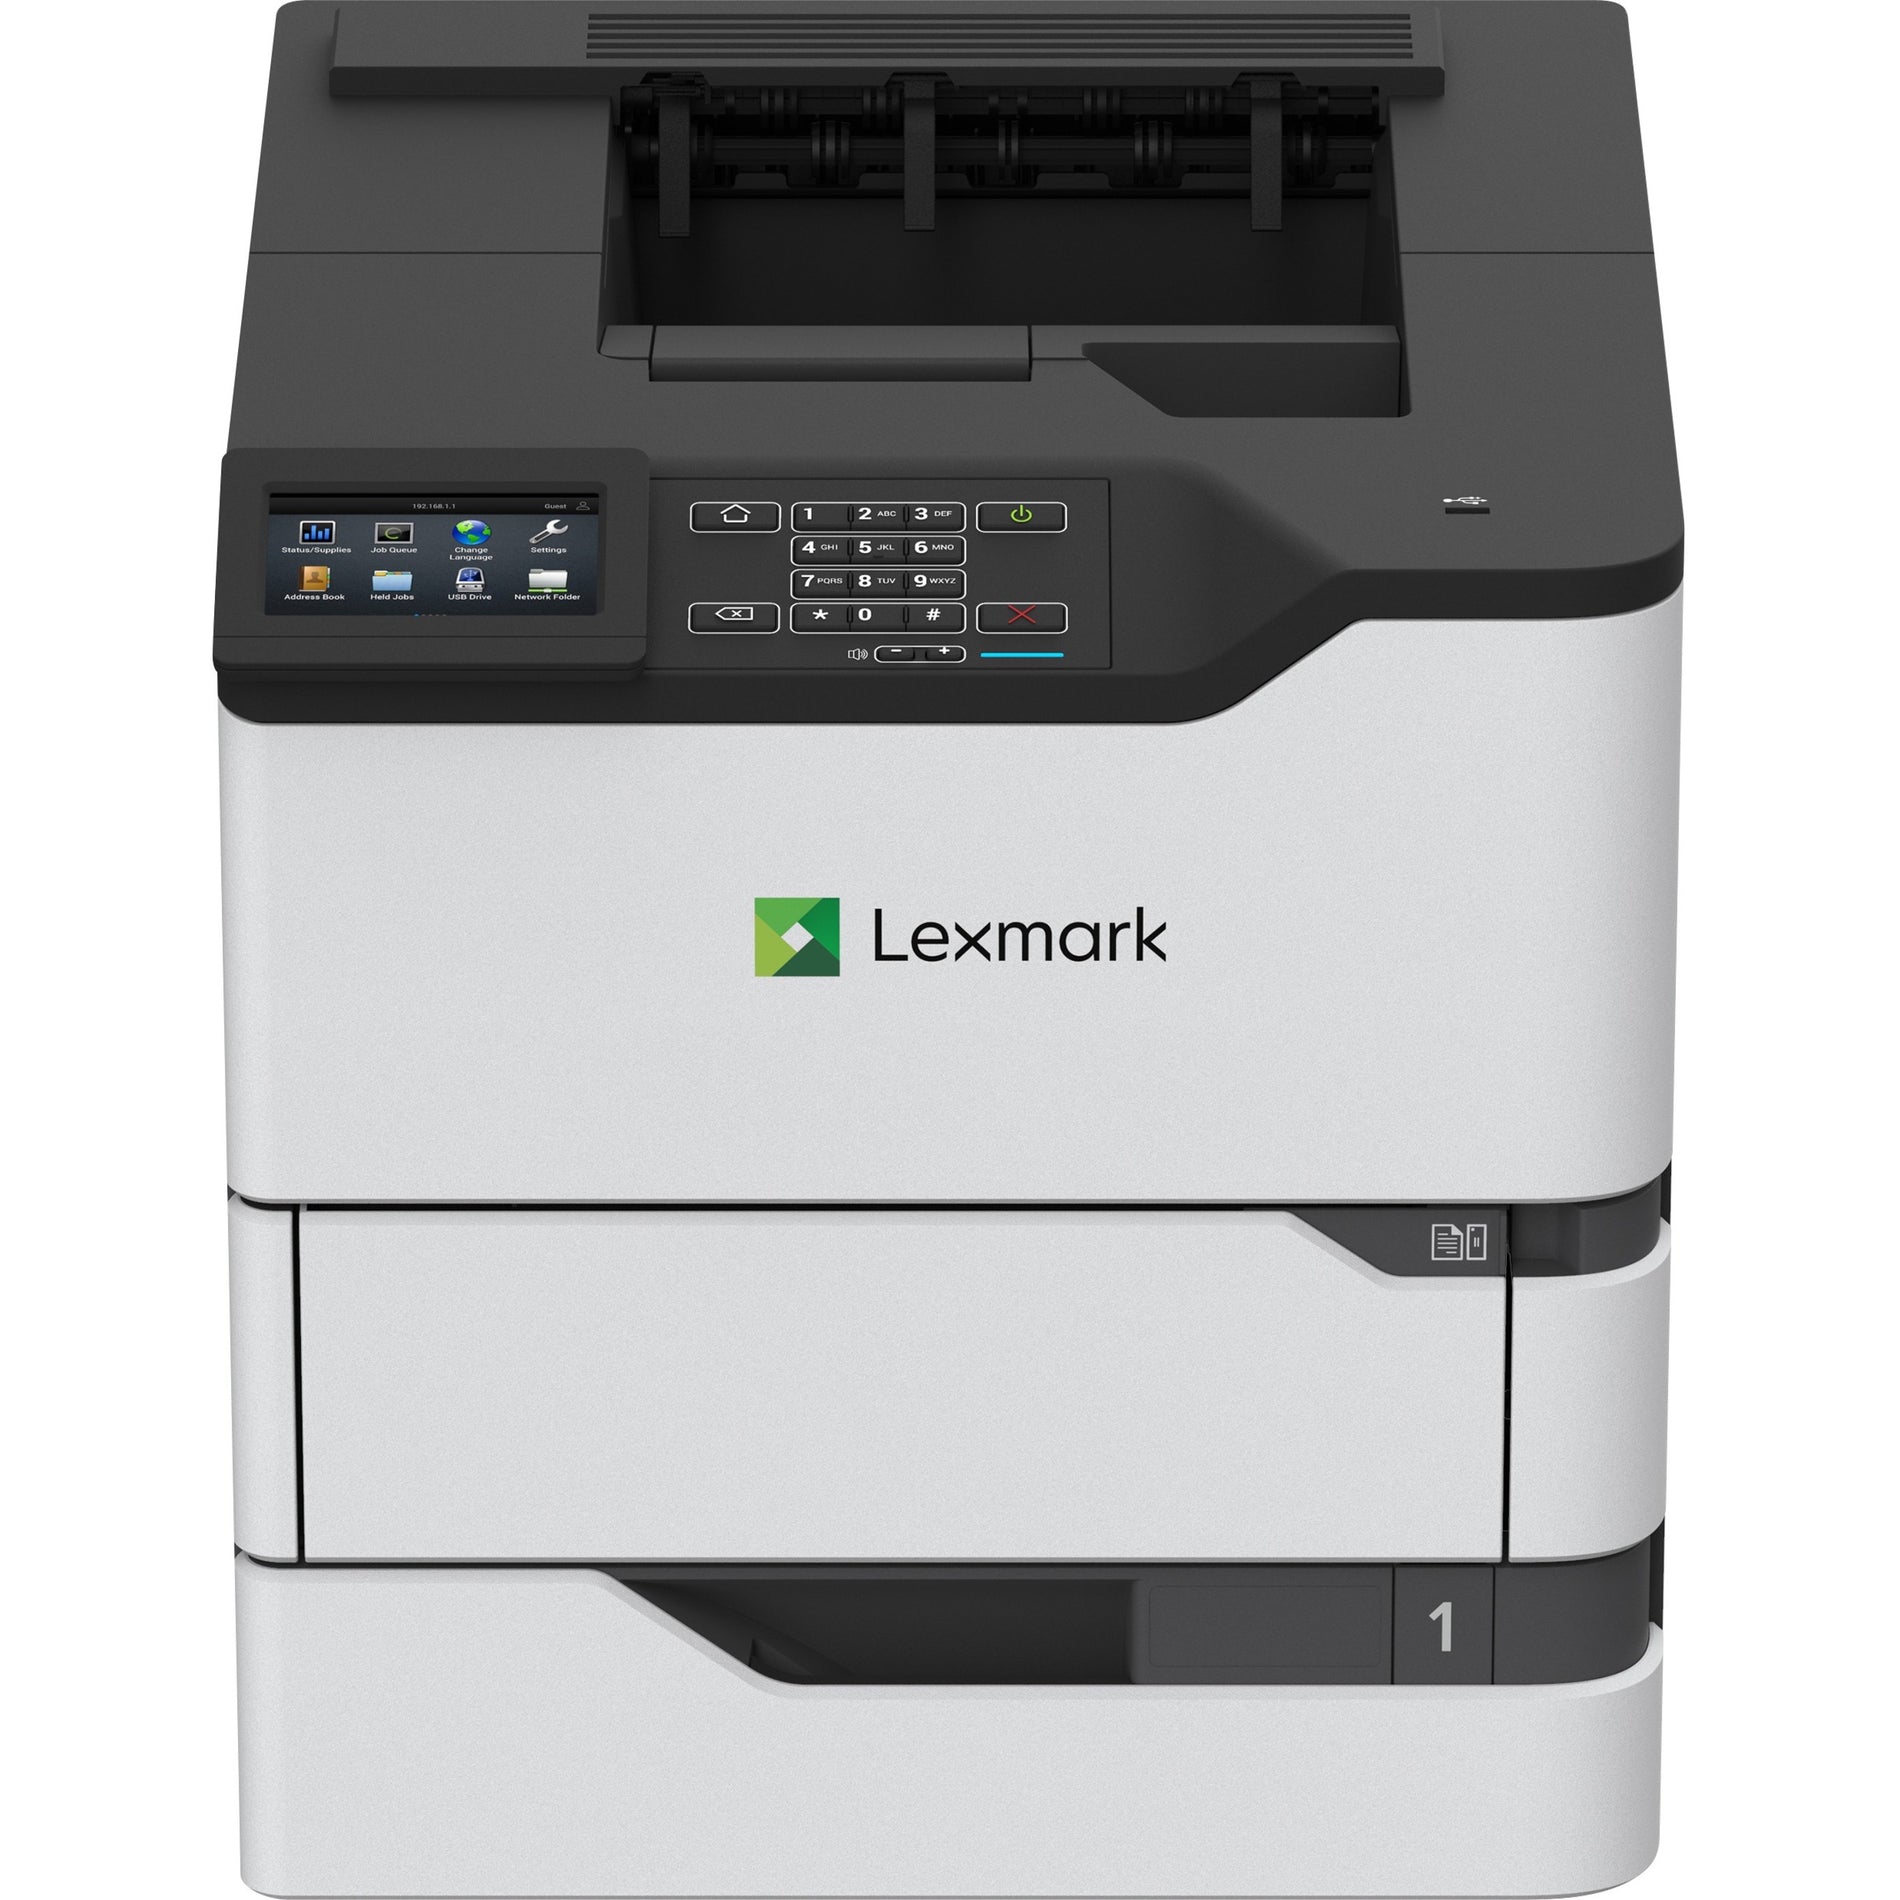 Lexmark 50GT310 MS826de 데스크톱 레이저 프린터 - 단색 70 ppm 1200 x 1200 dpi 자동 양면 인쇄